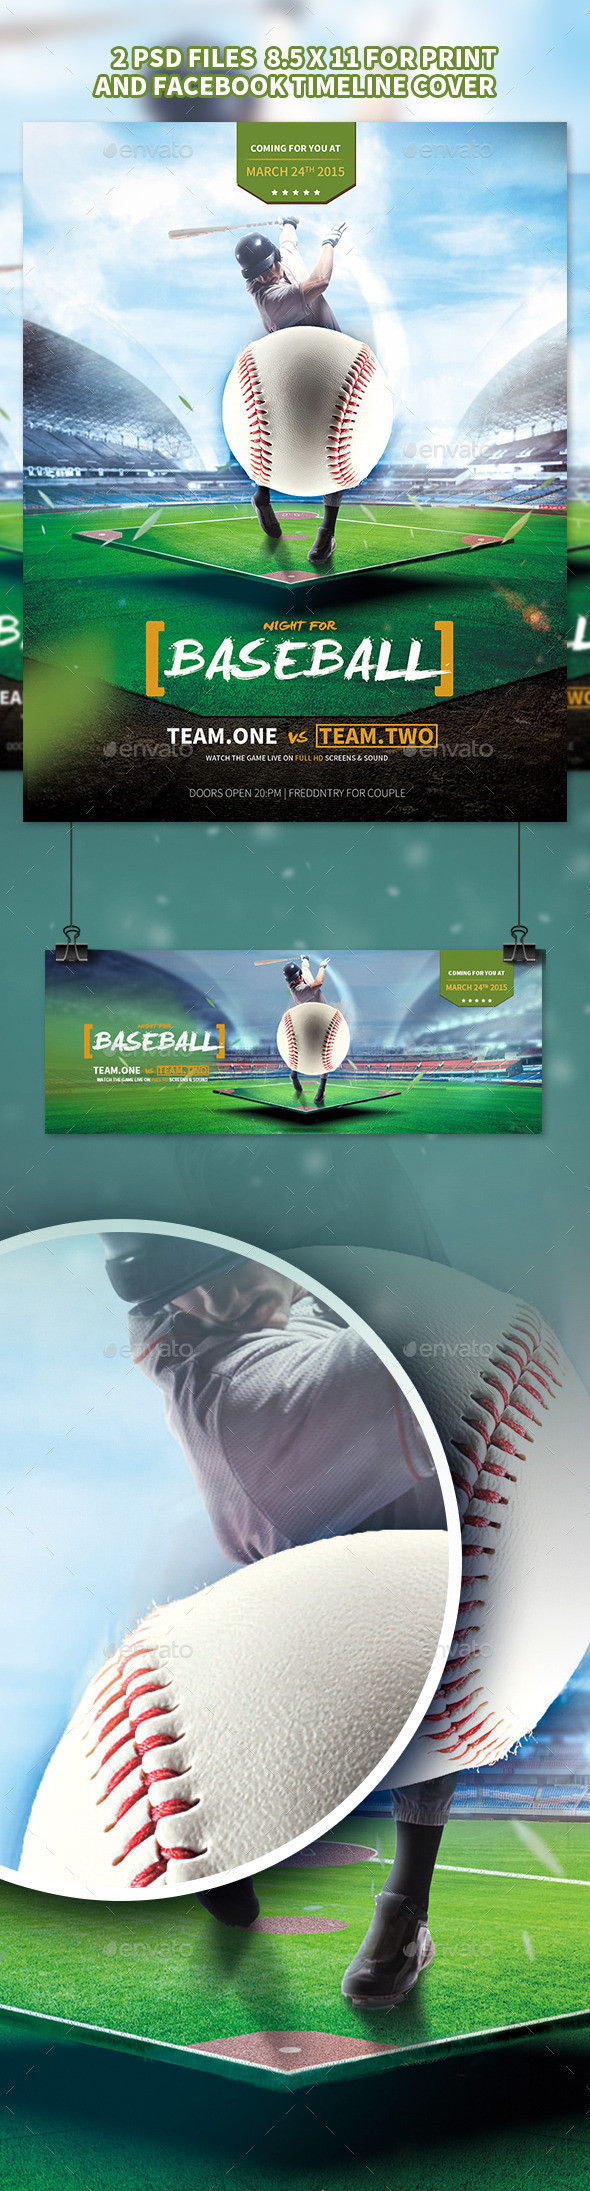 Baseball image preview